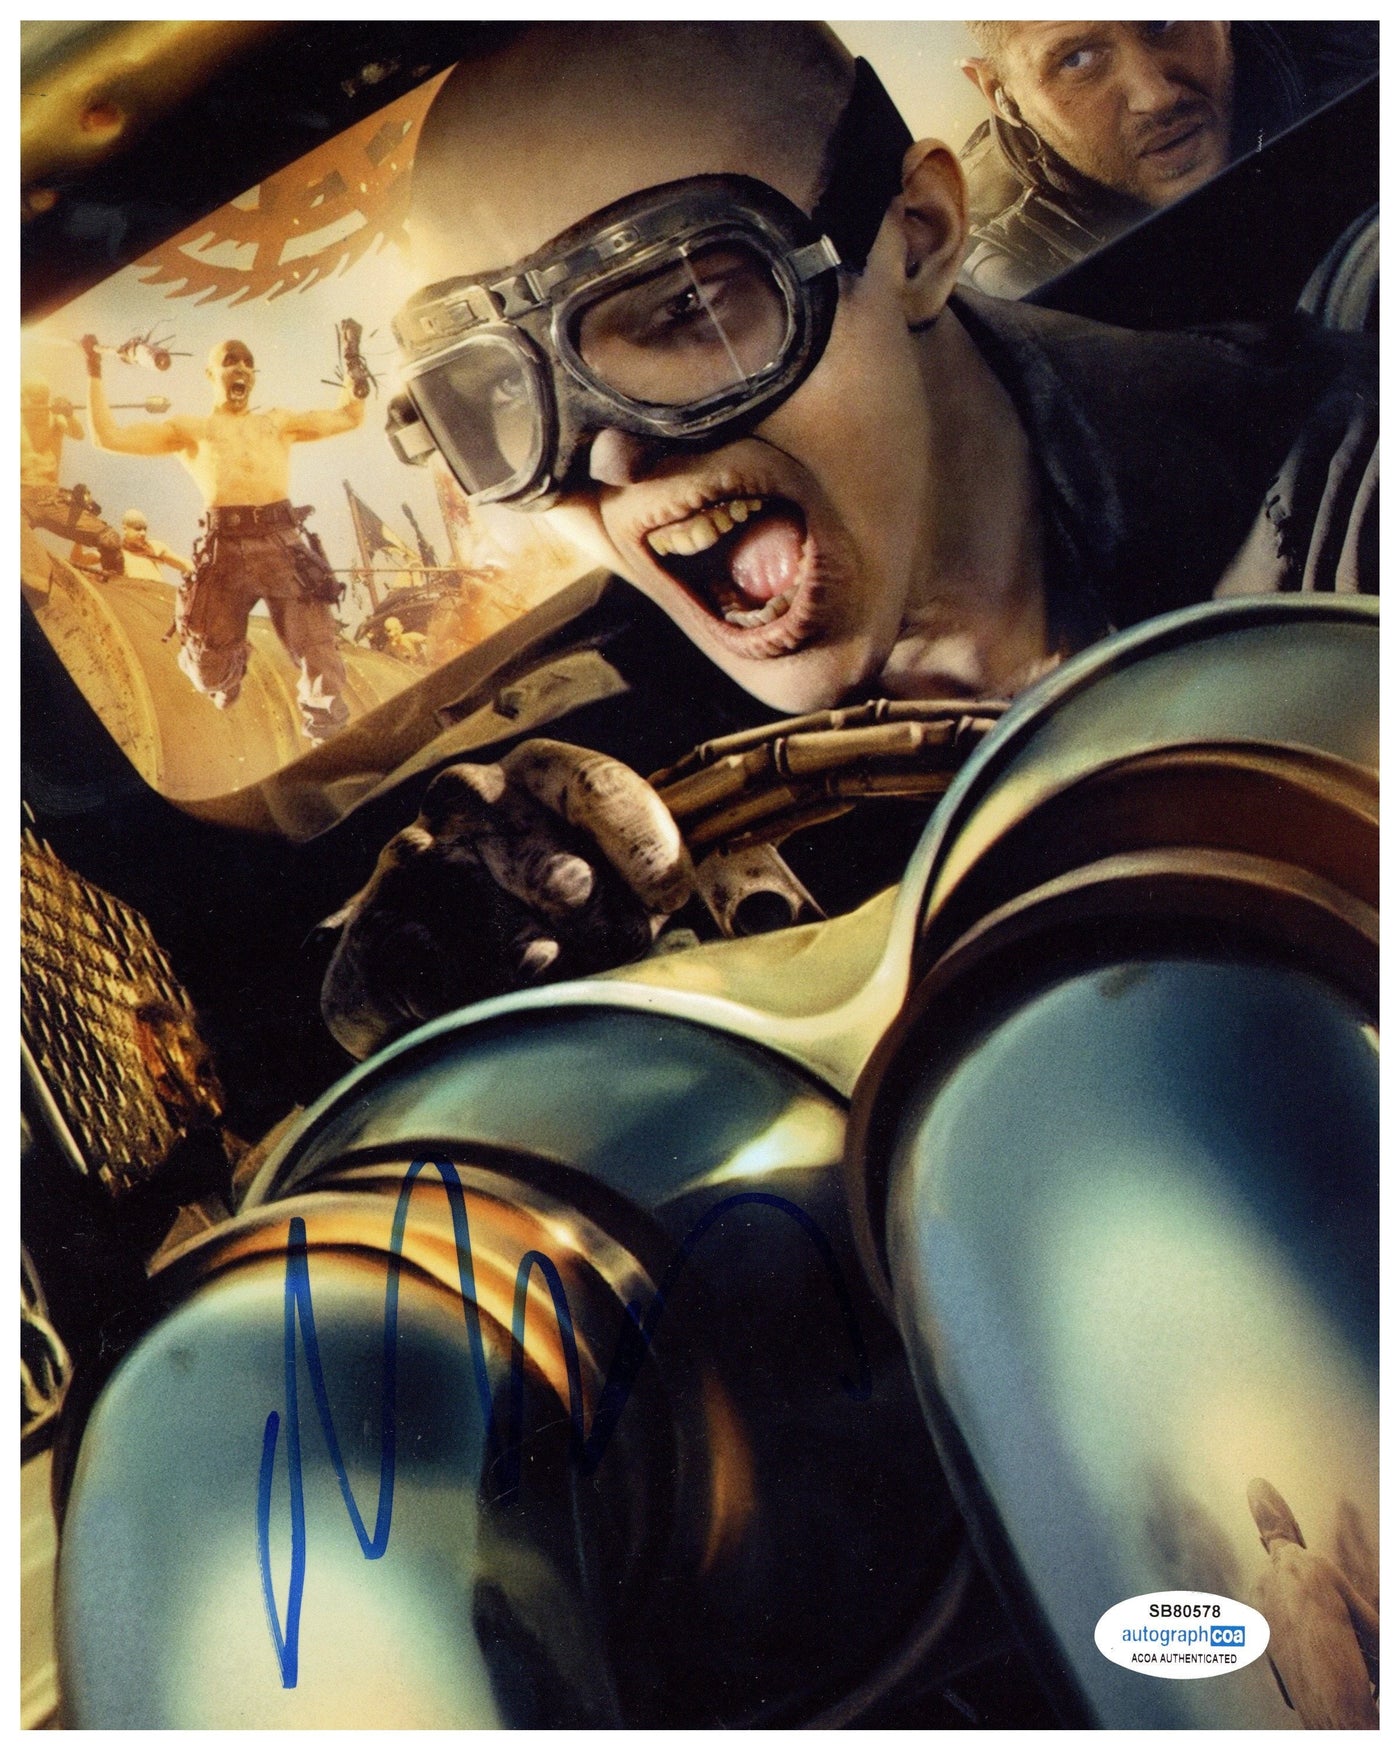 Nicholas Hoult Signed 8x10 Photo Mad Max Nux Autographed ACOA #4